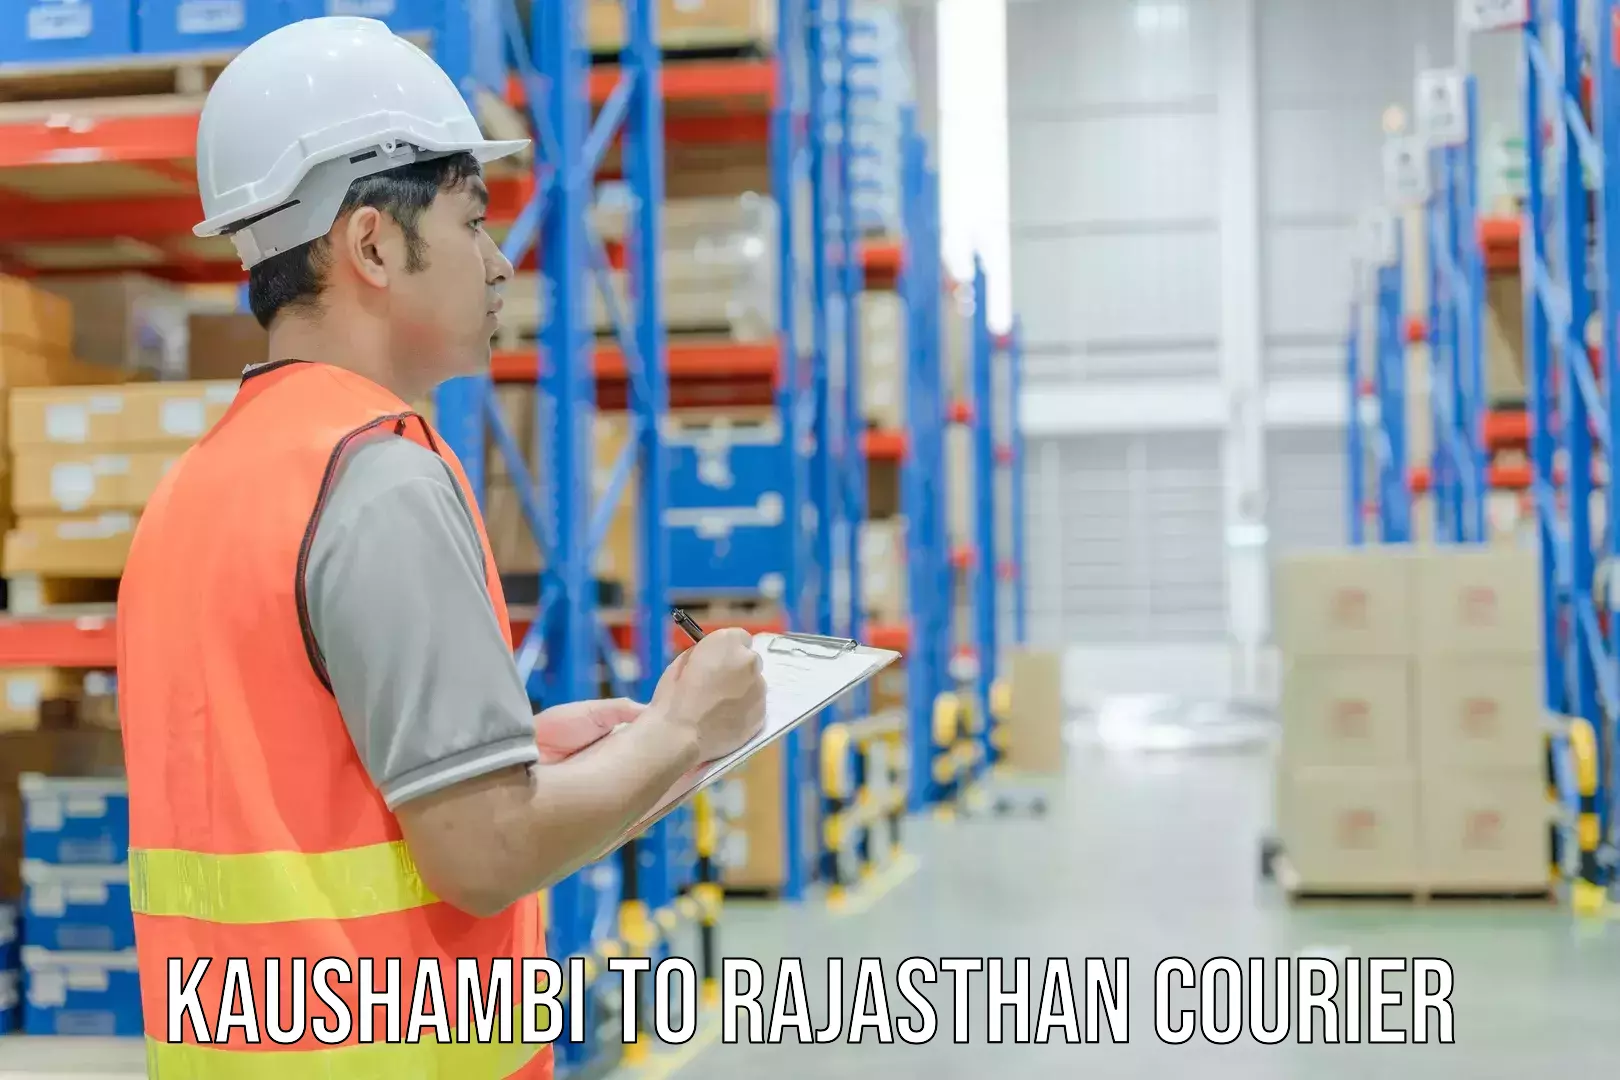 Courier service comparison Kaushambi to Rajasthan